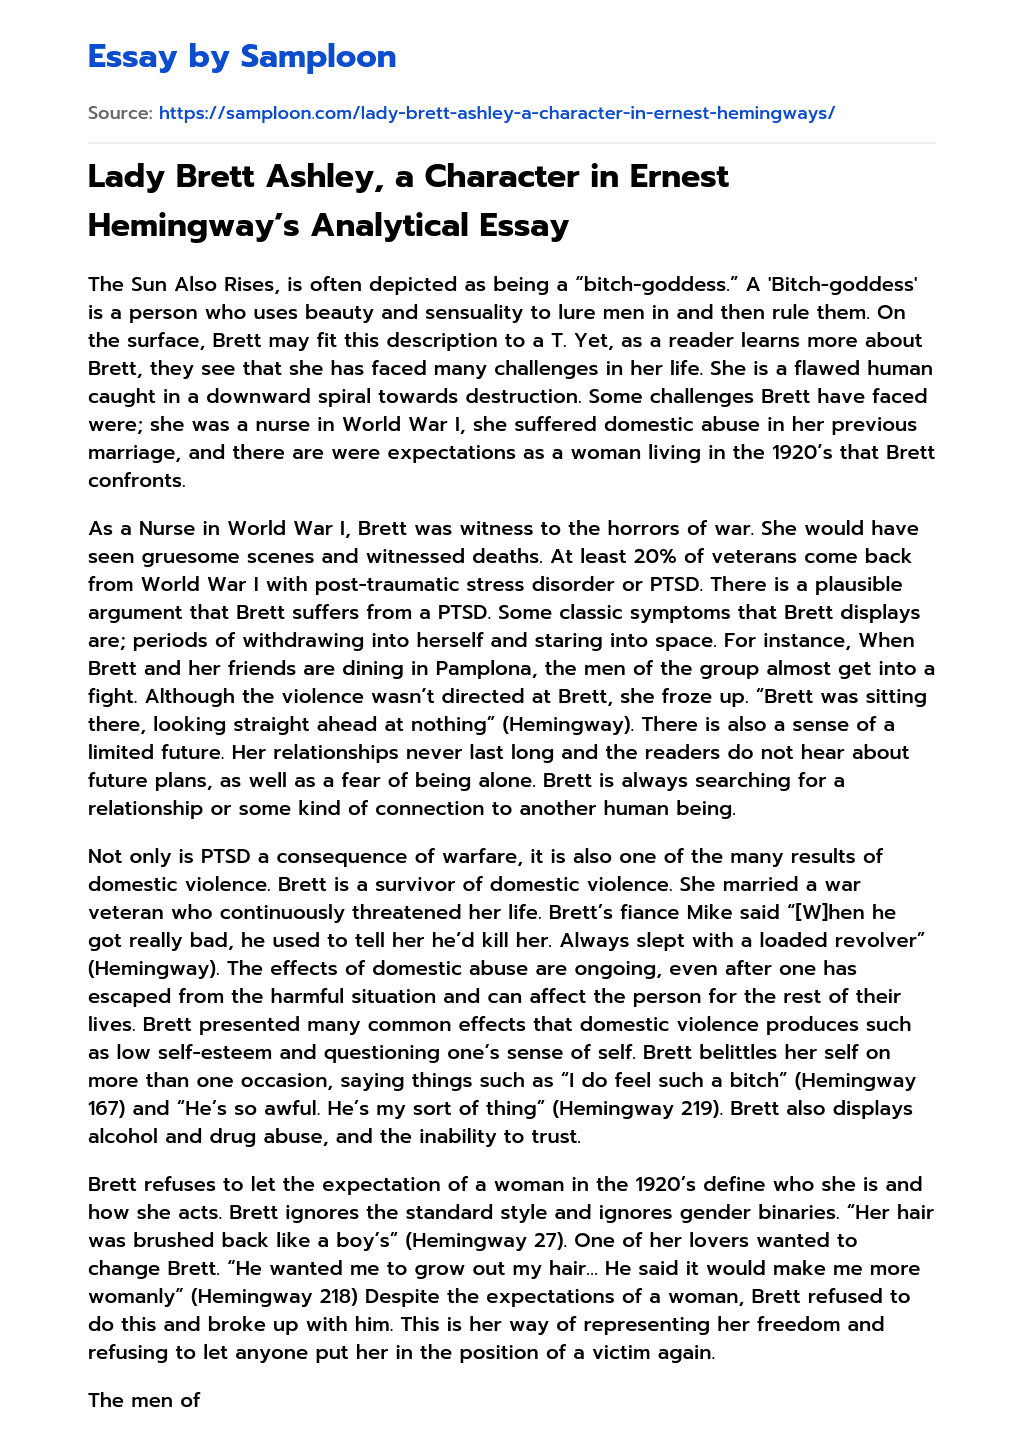 Lady Brett Ashley, a Character in Ernest Hemingway’s Analytical Essay essay